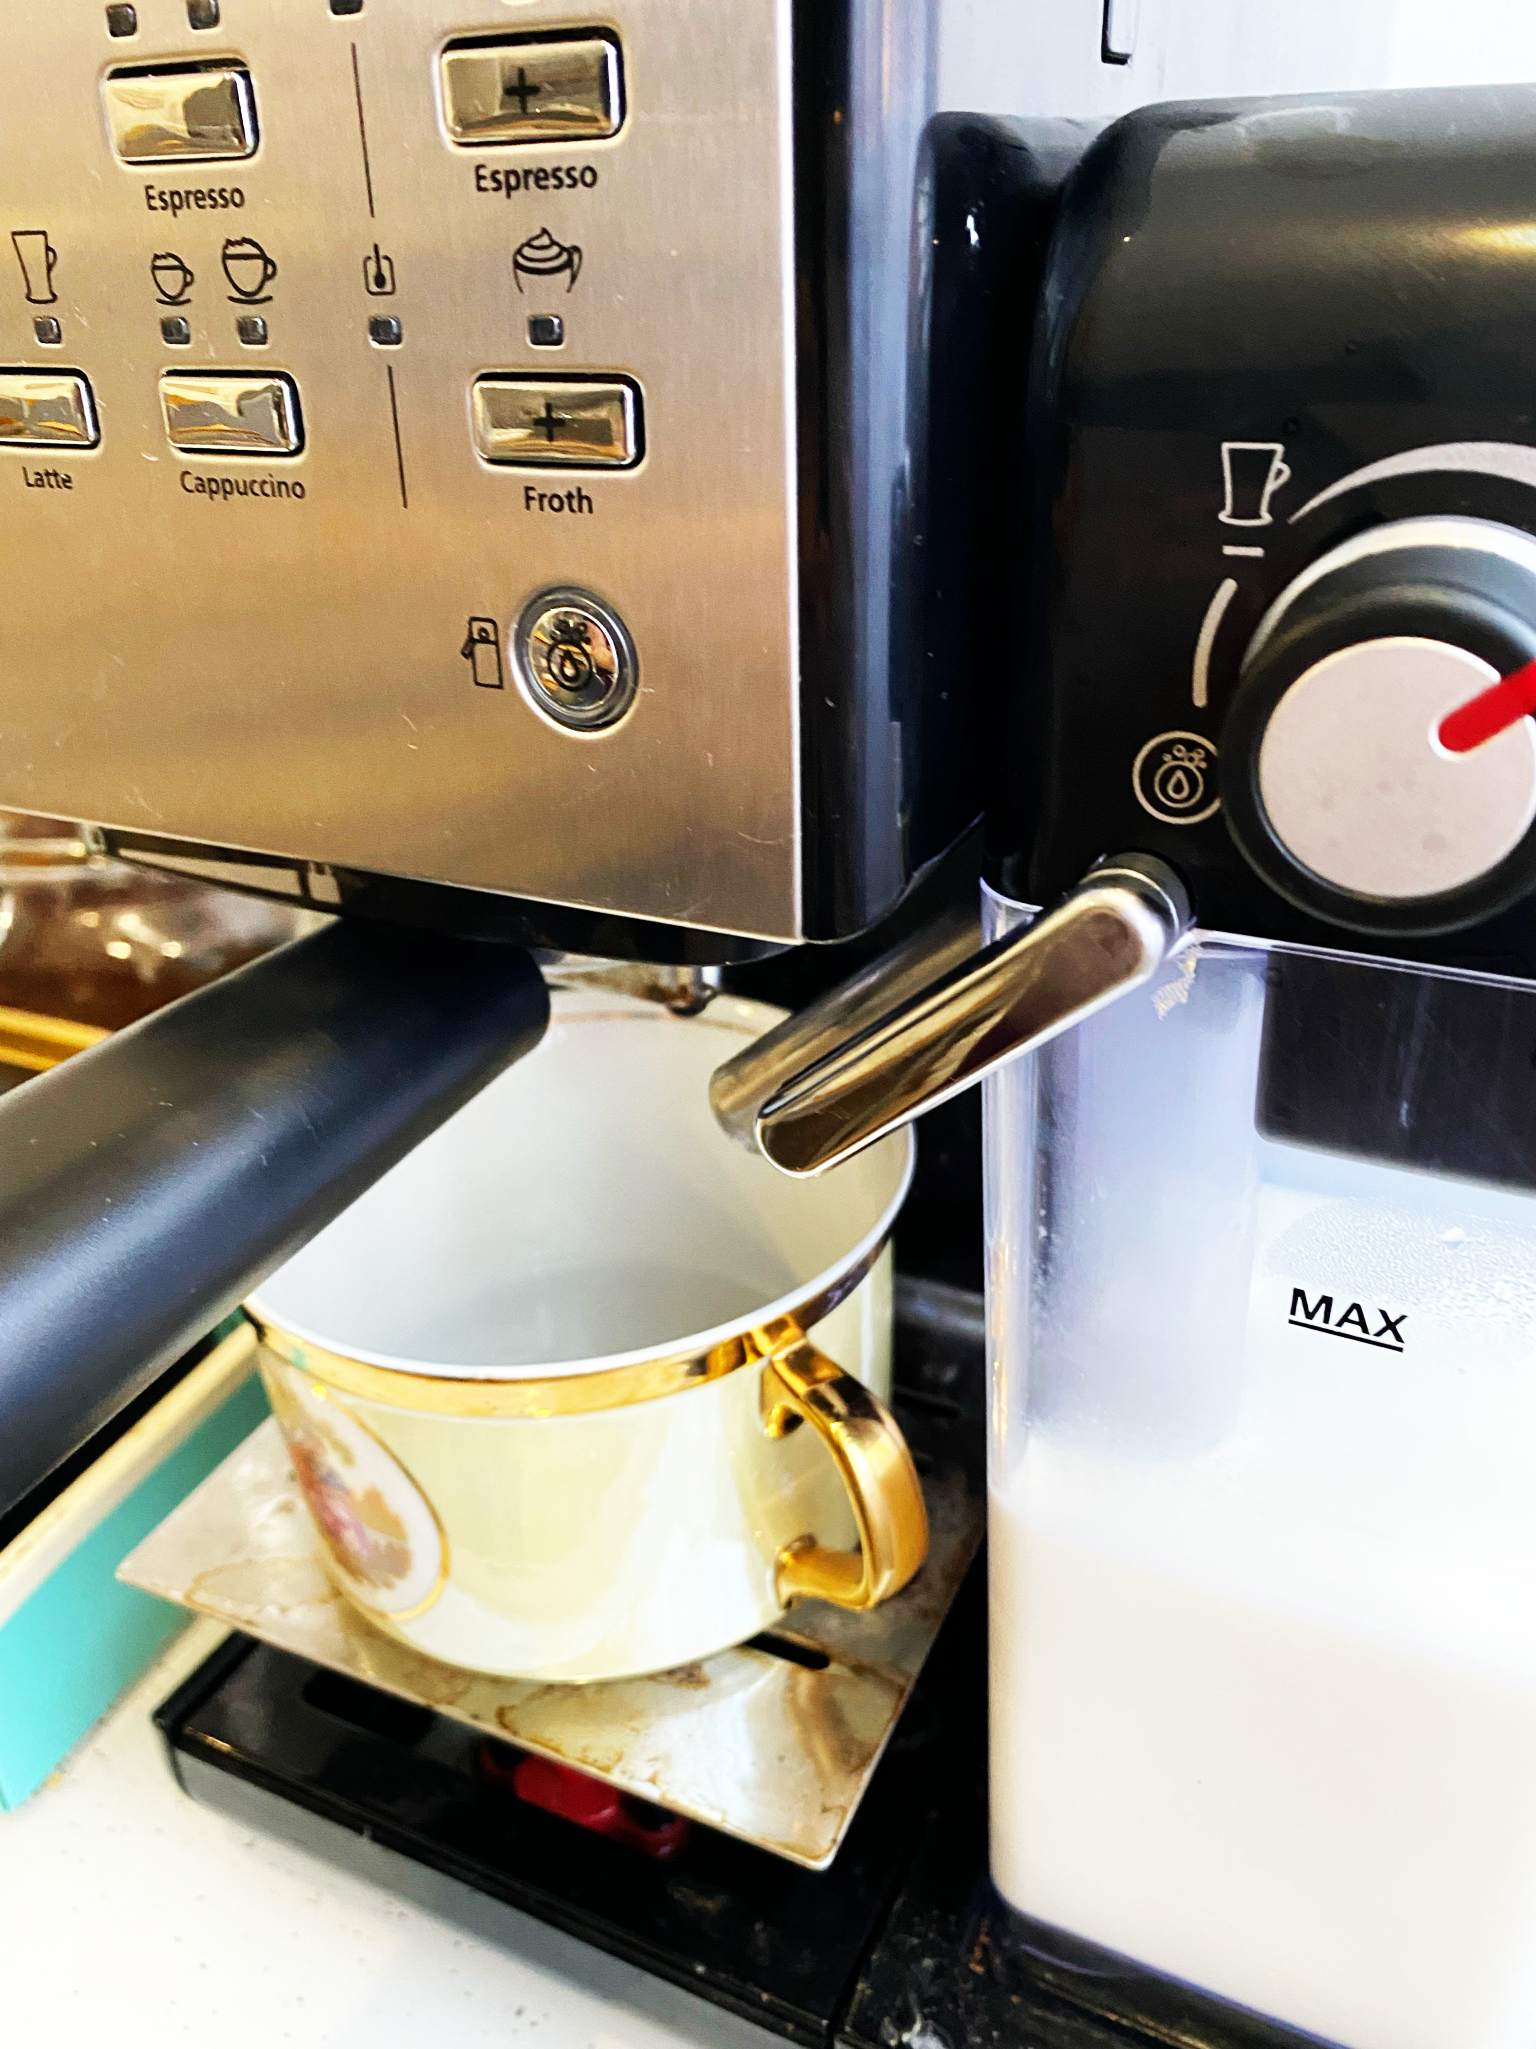 Mr. Coffee One-Touch Coffeehouse Espresso and Cappuccino Machine